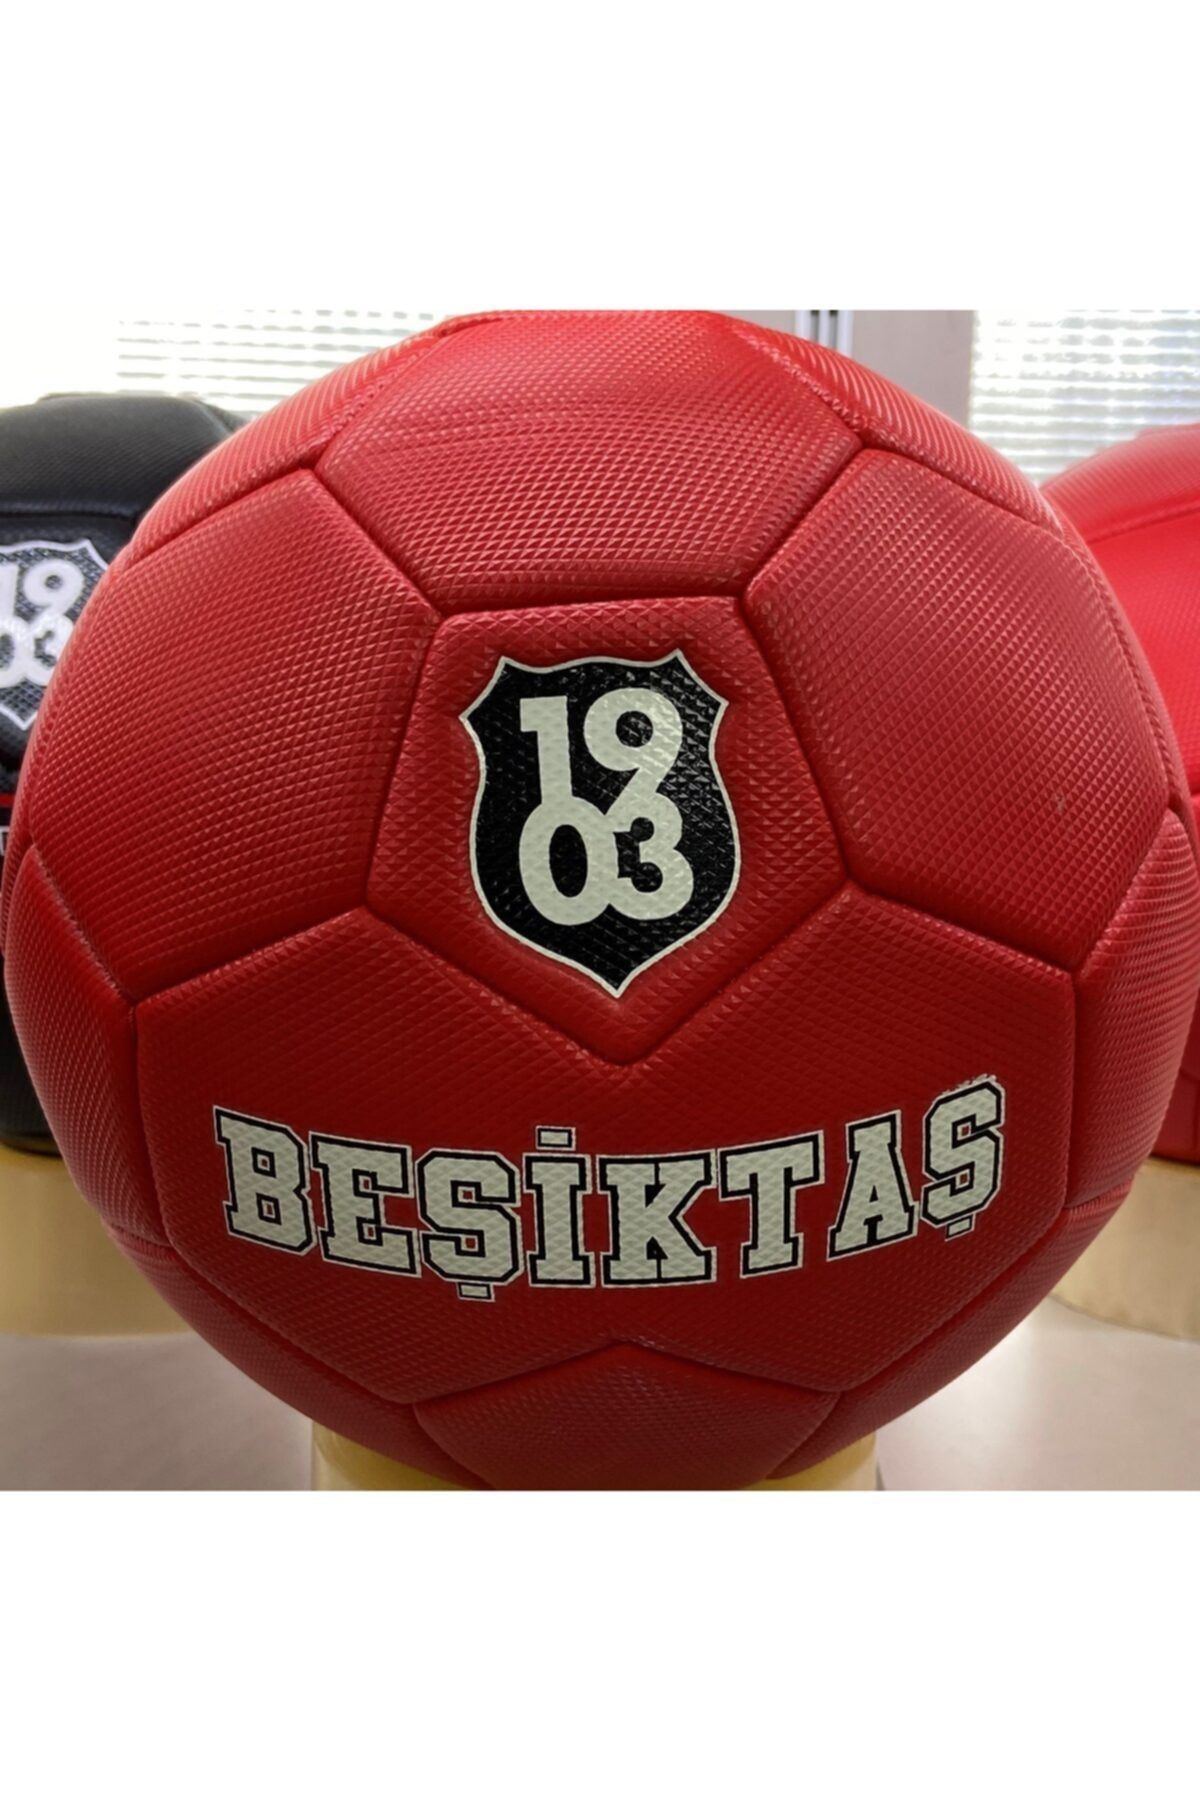 Beşiktaş Orjinal Lisanslı Futbol Topu - 1